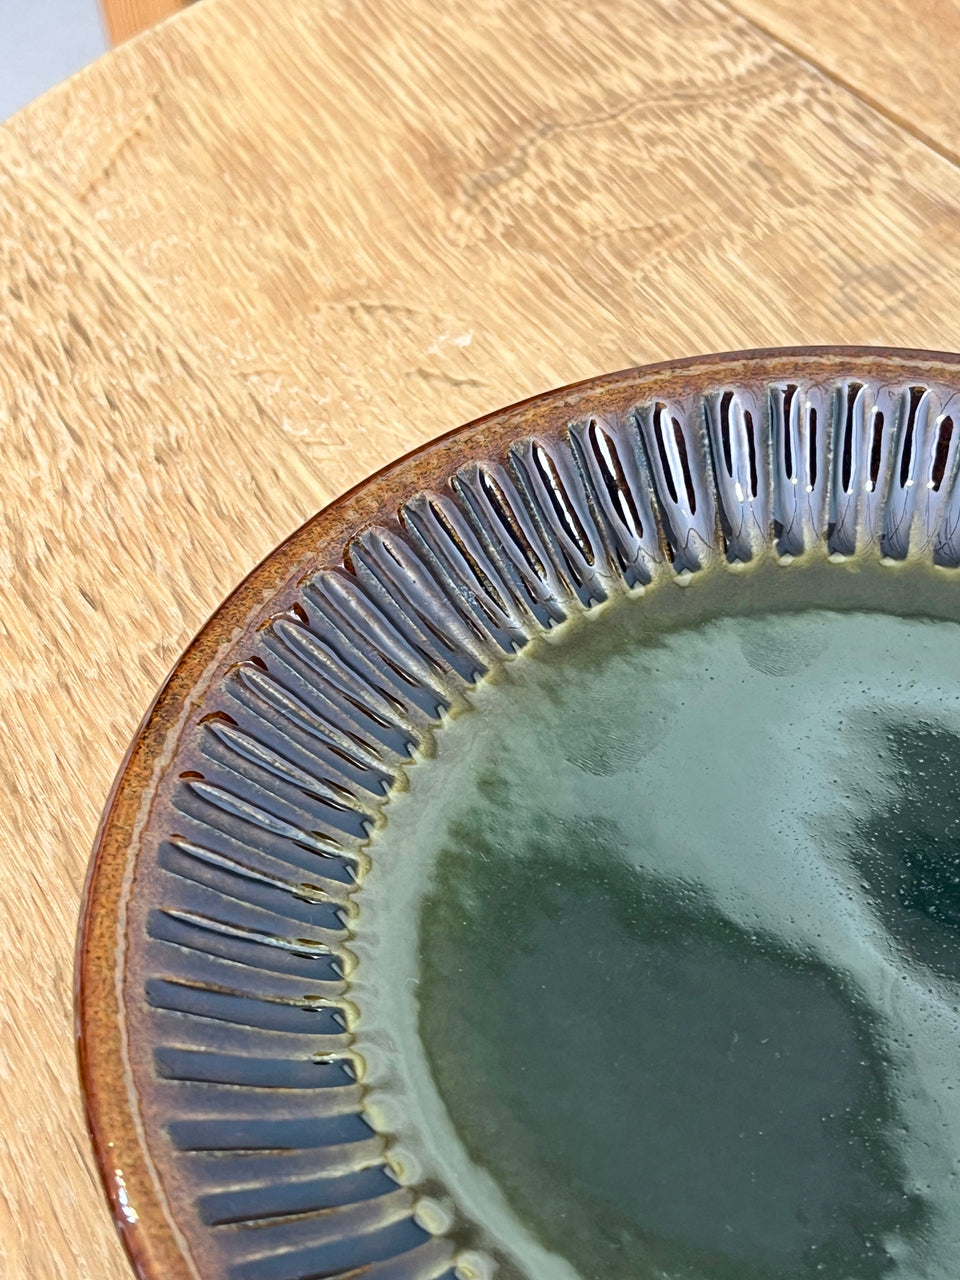 Gefle Olive Tea Cup and Saucer Plate Swedish Vintage/ゲフレ オリーブ ティーカップ&ソーサー 北欧ヴィンテージ食器